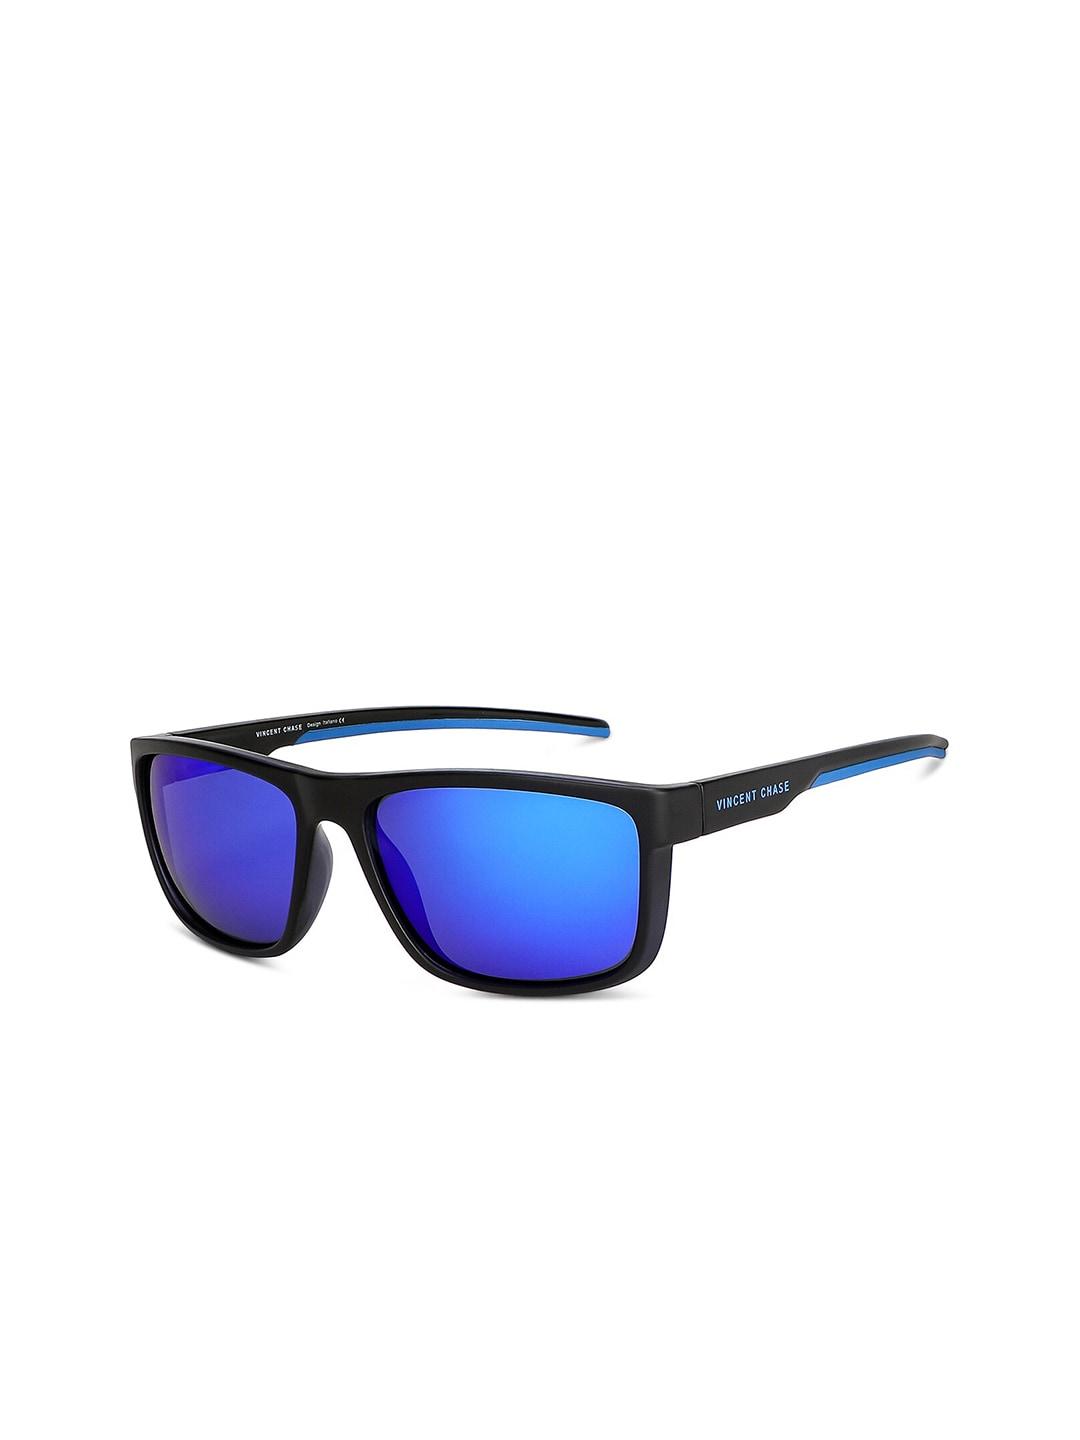 vincent chase unisex blue lens & black sports sunglasses with polarised lens